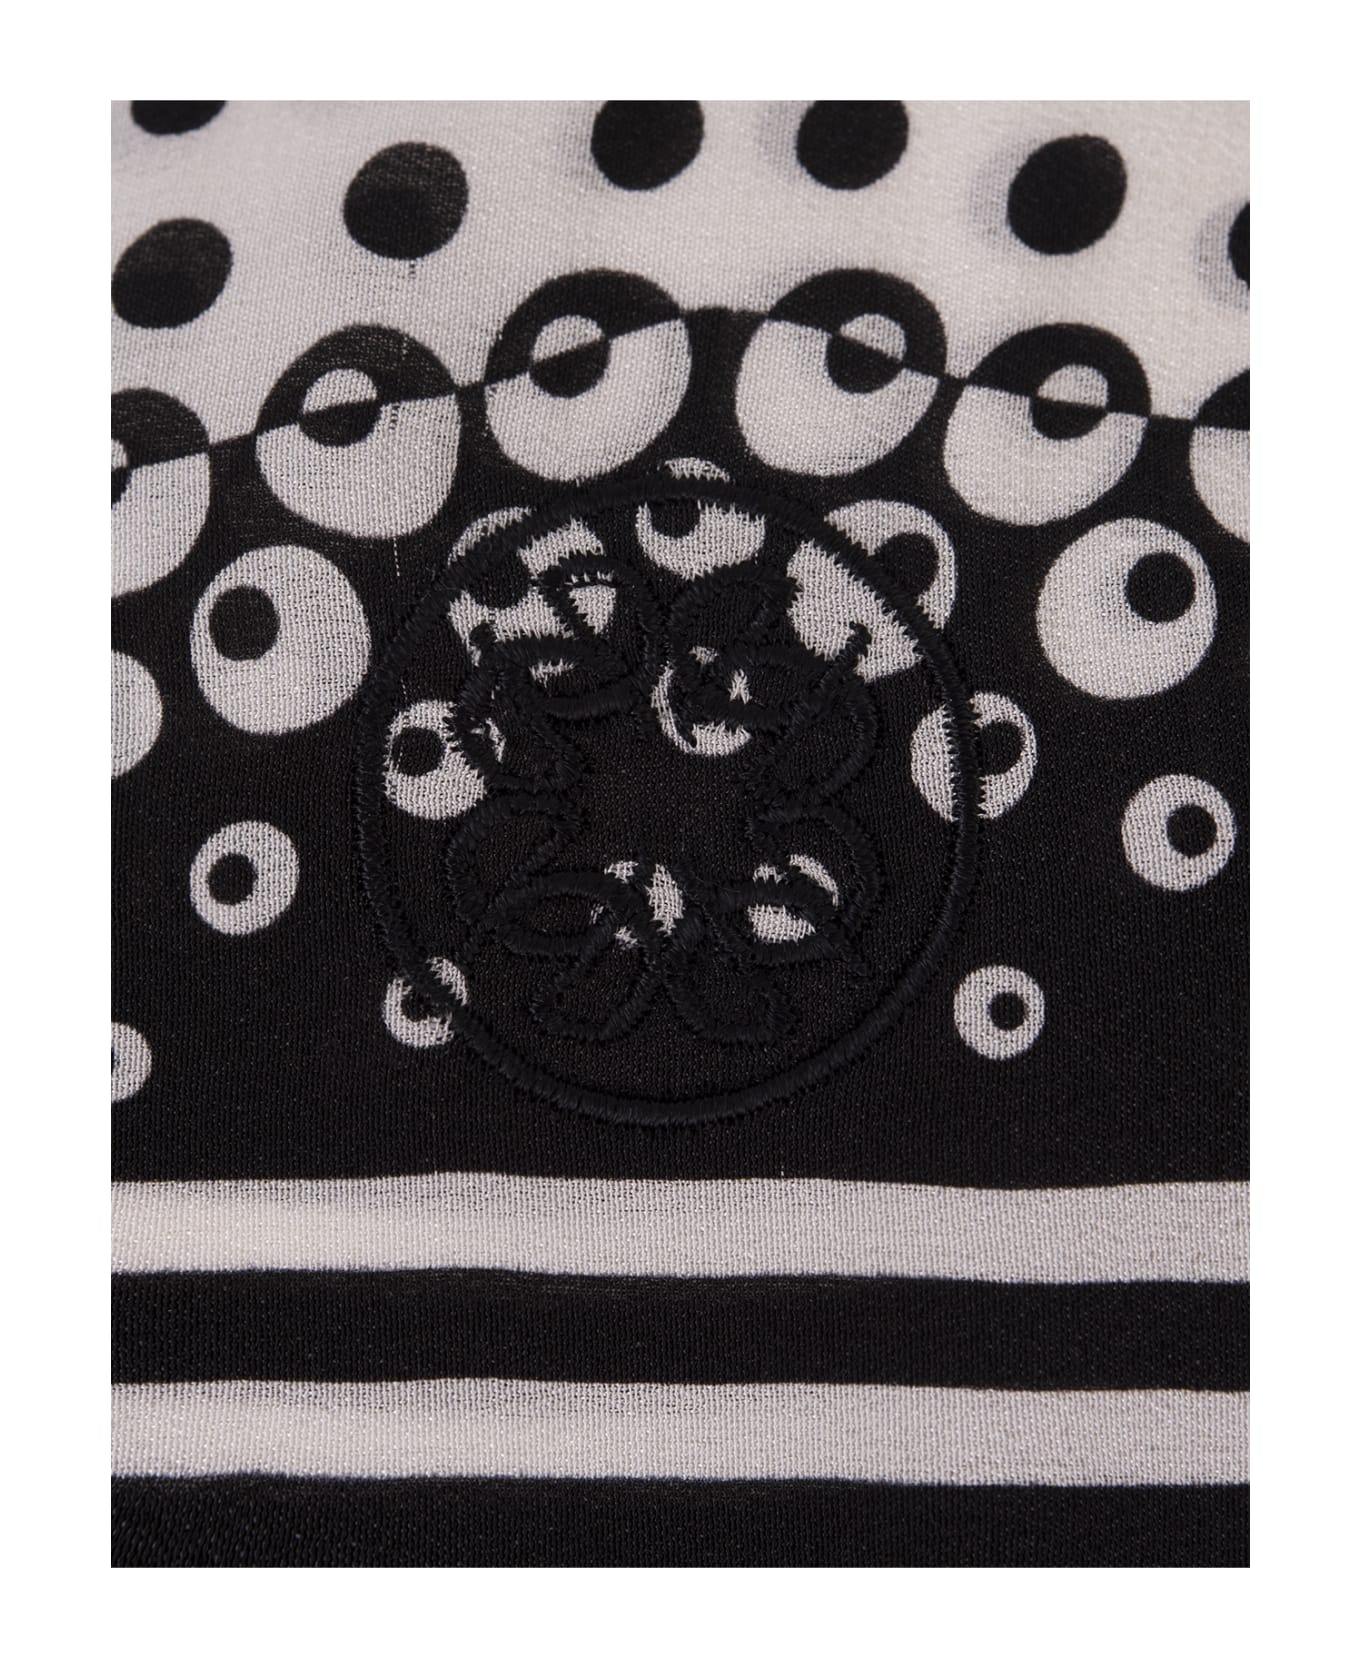 Elie Saab Moon Printed Silk Shirt In White And Black - White